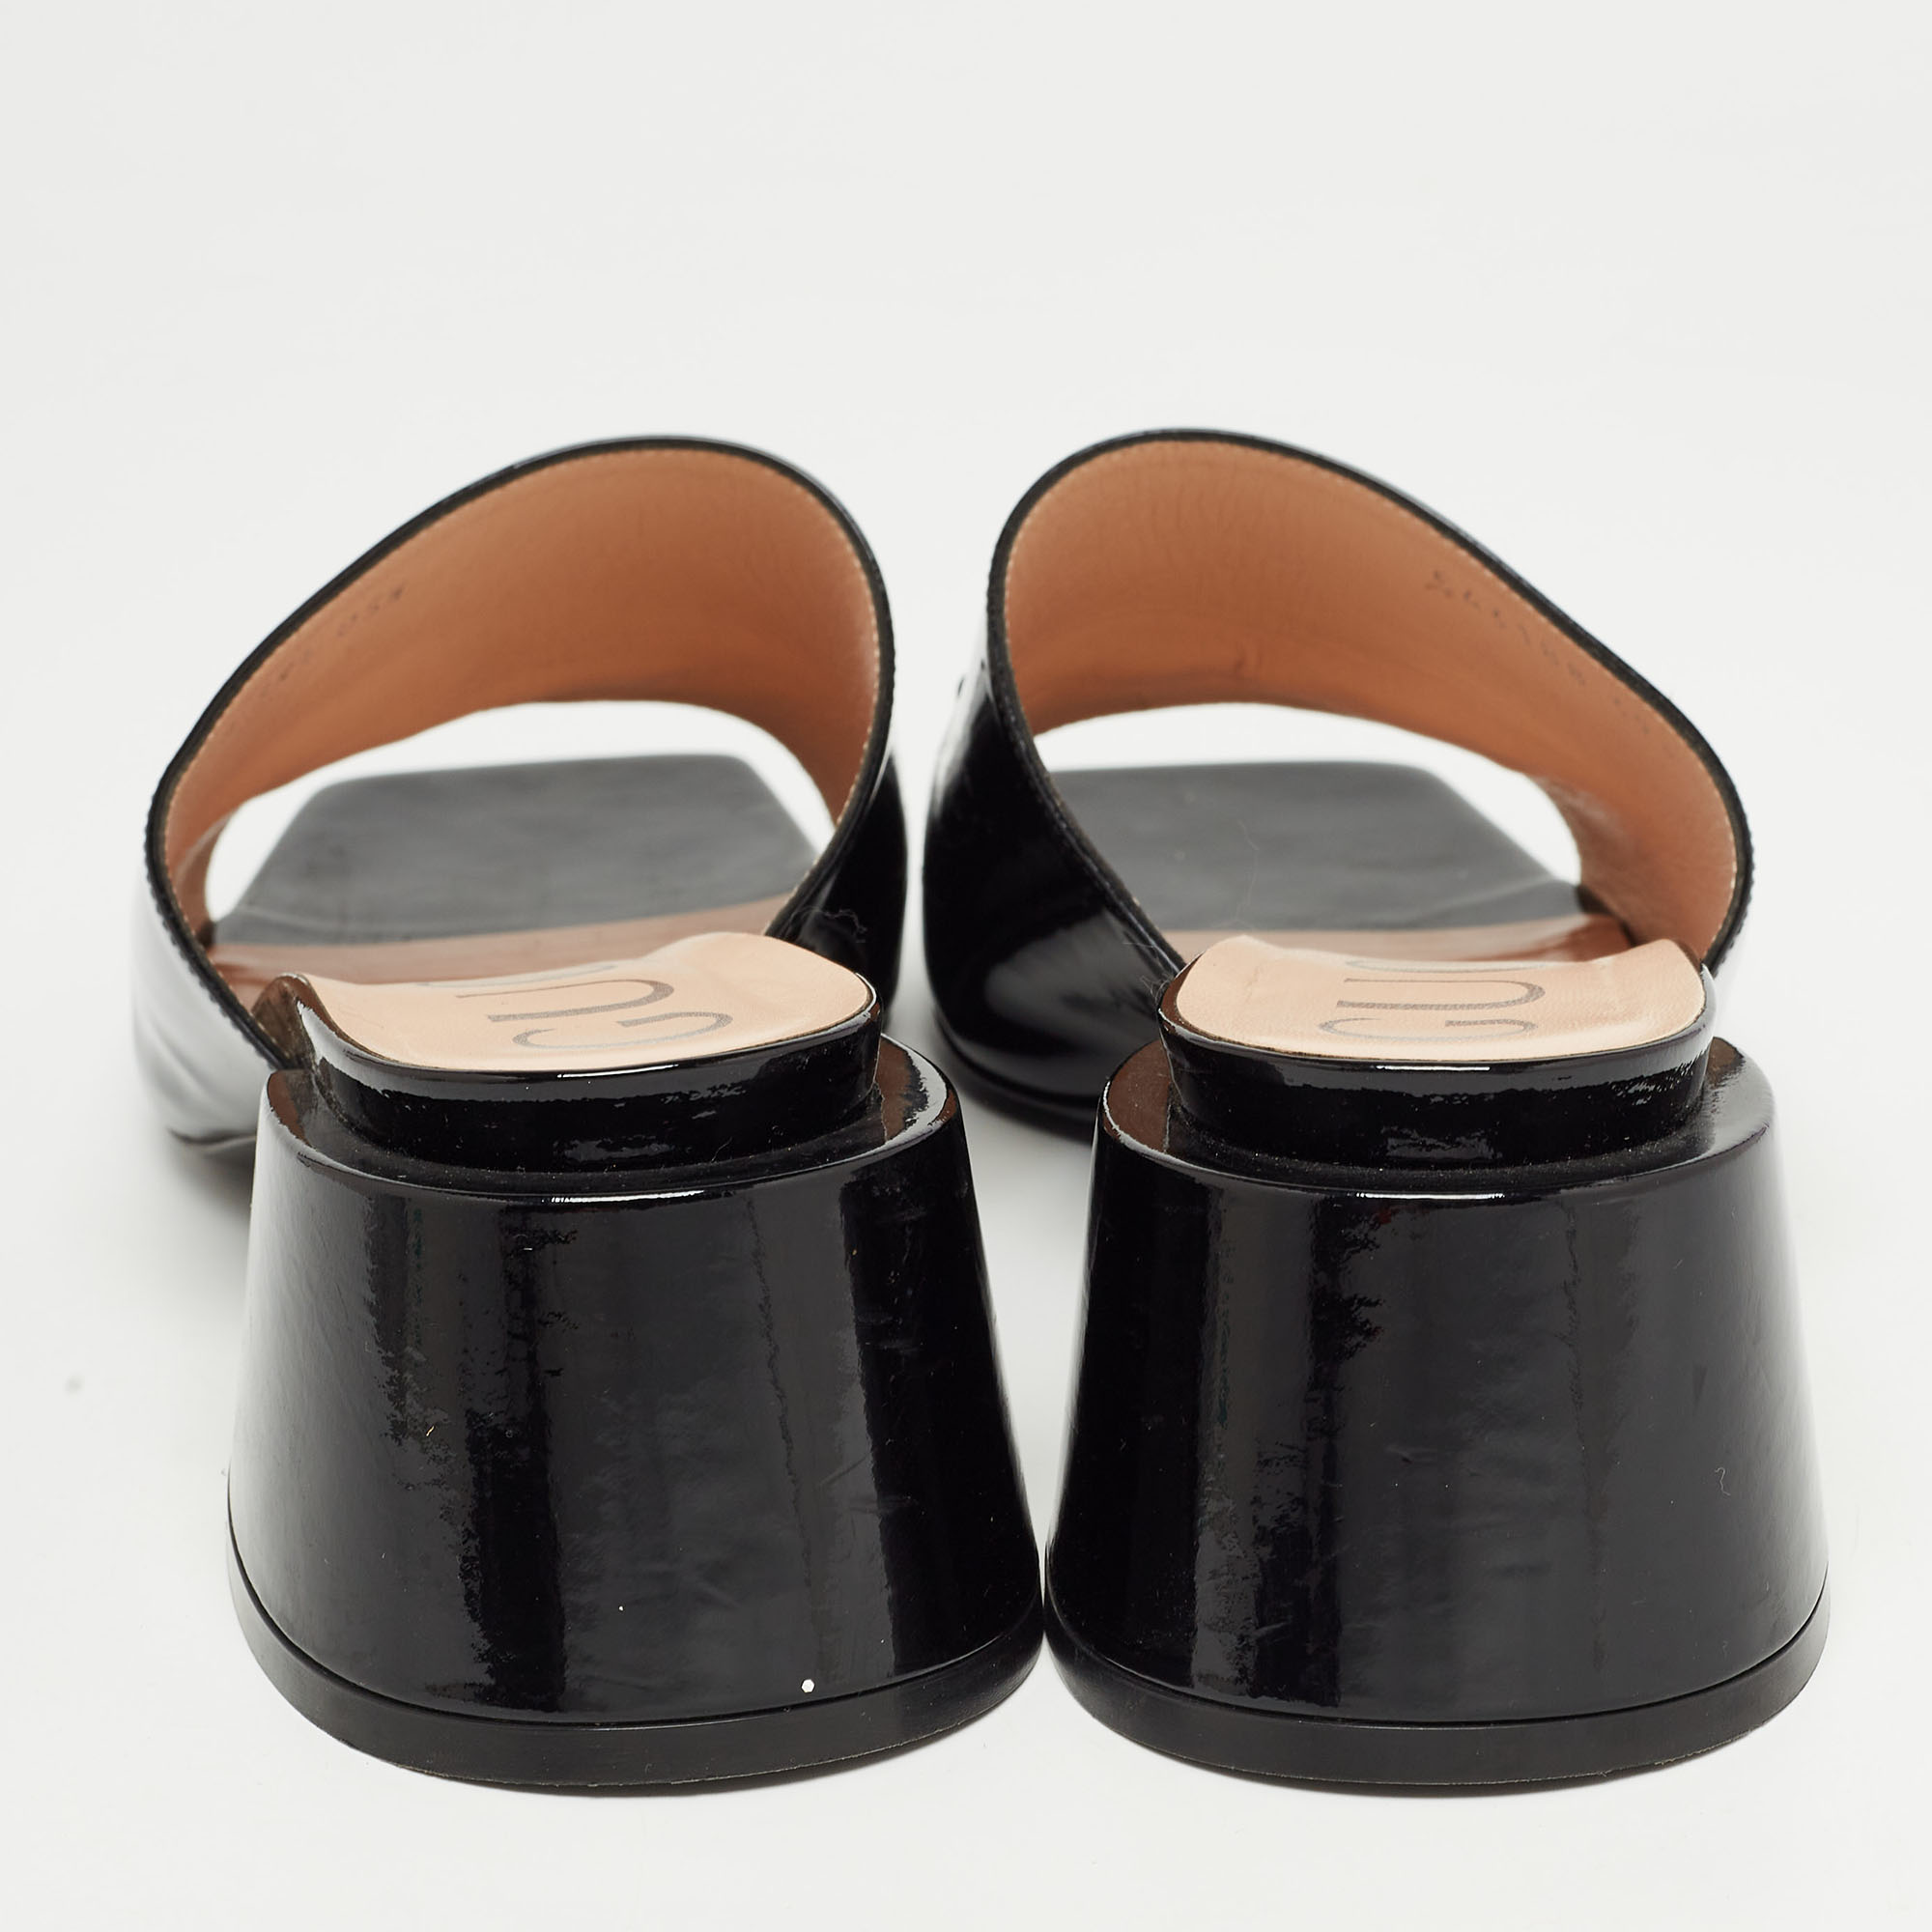 Gucci Black Patent Leather Horsebit Block Heel Slide Sandals Size 39.5